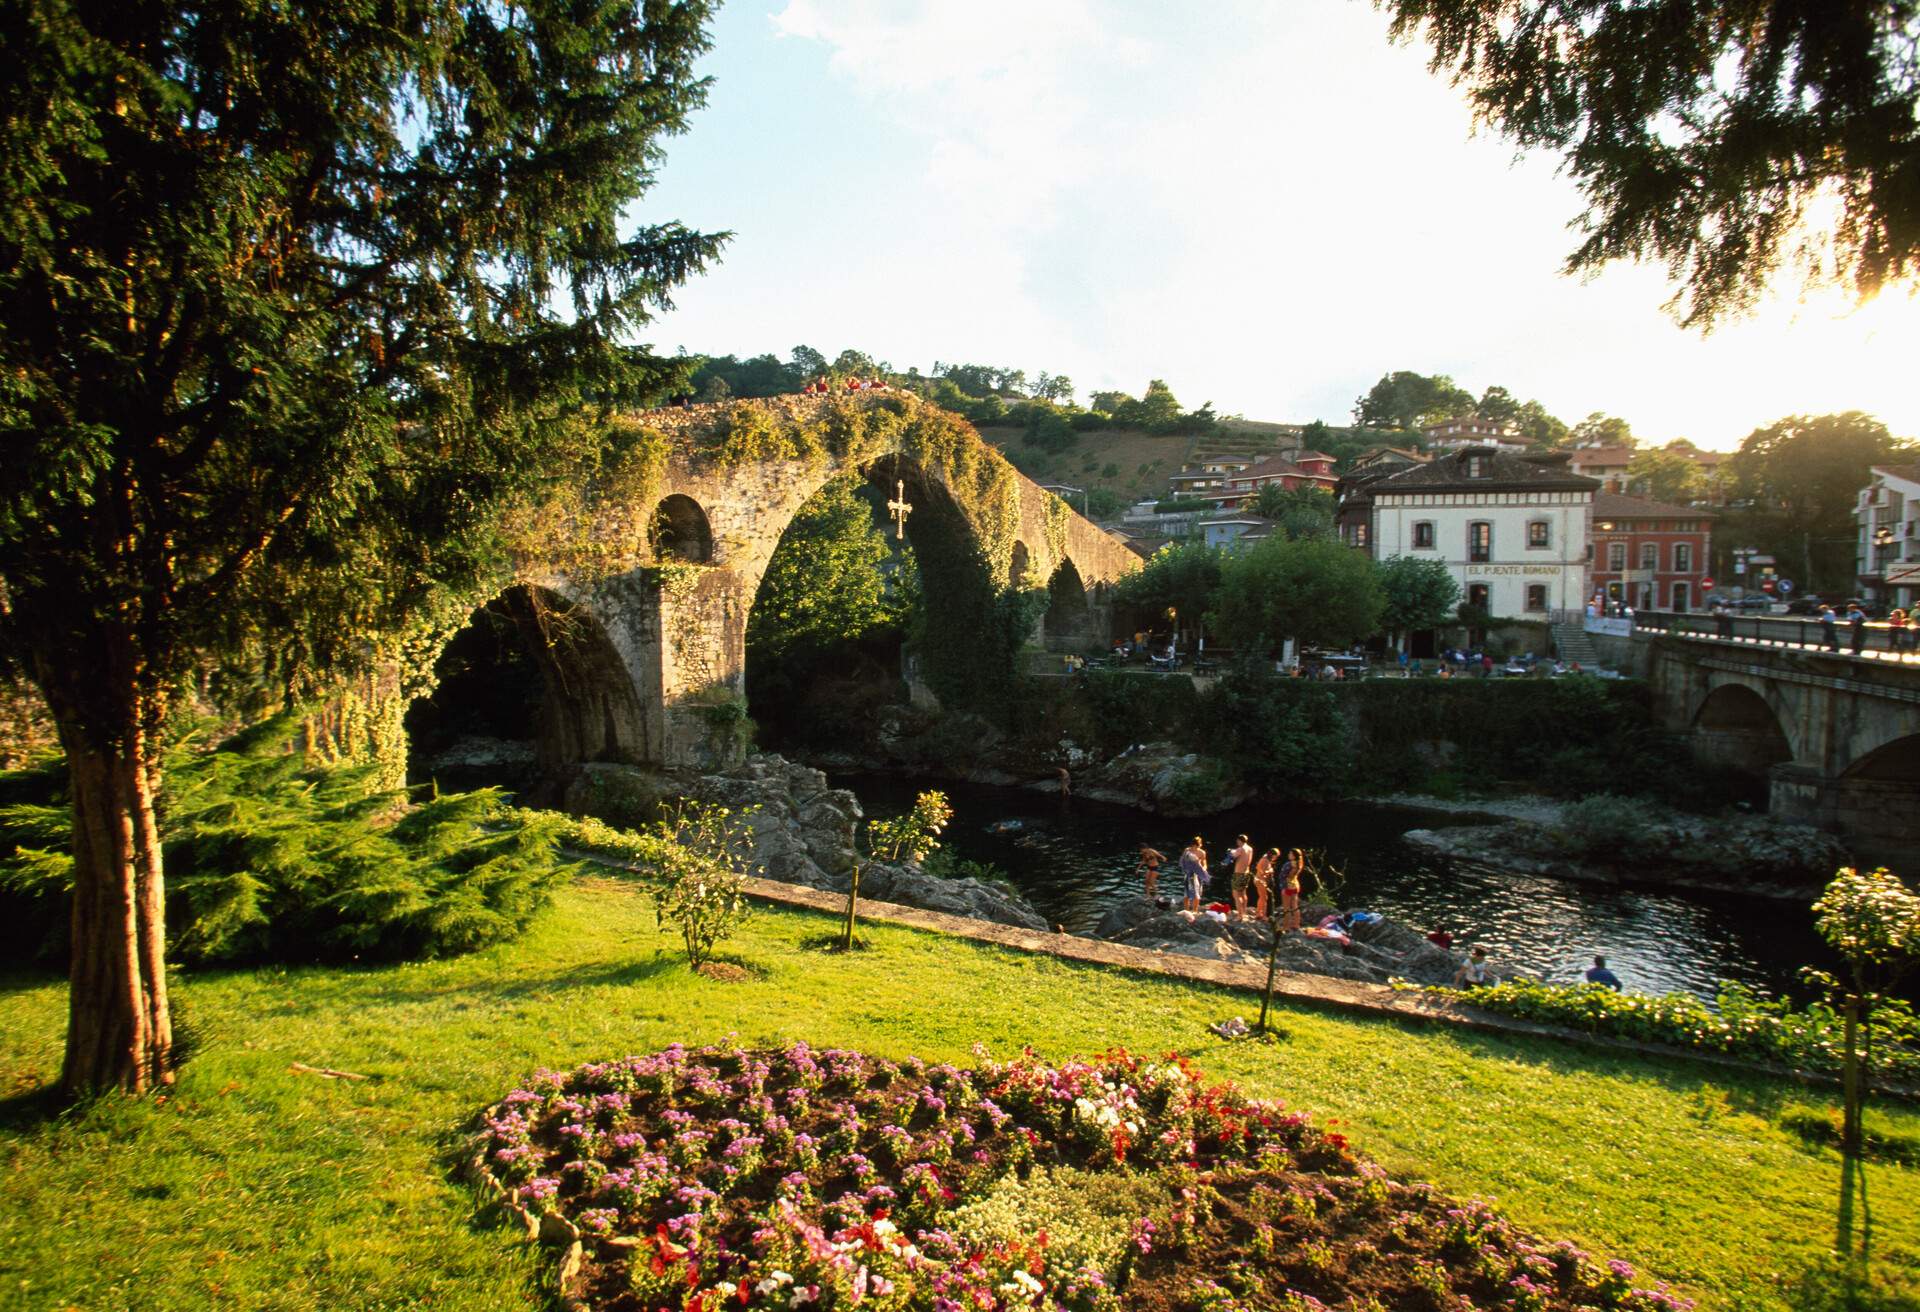 View of Puente Romano (Roman Bridge) spanning the Sella River in Cangas de Onis.